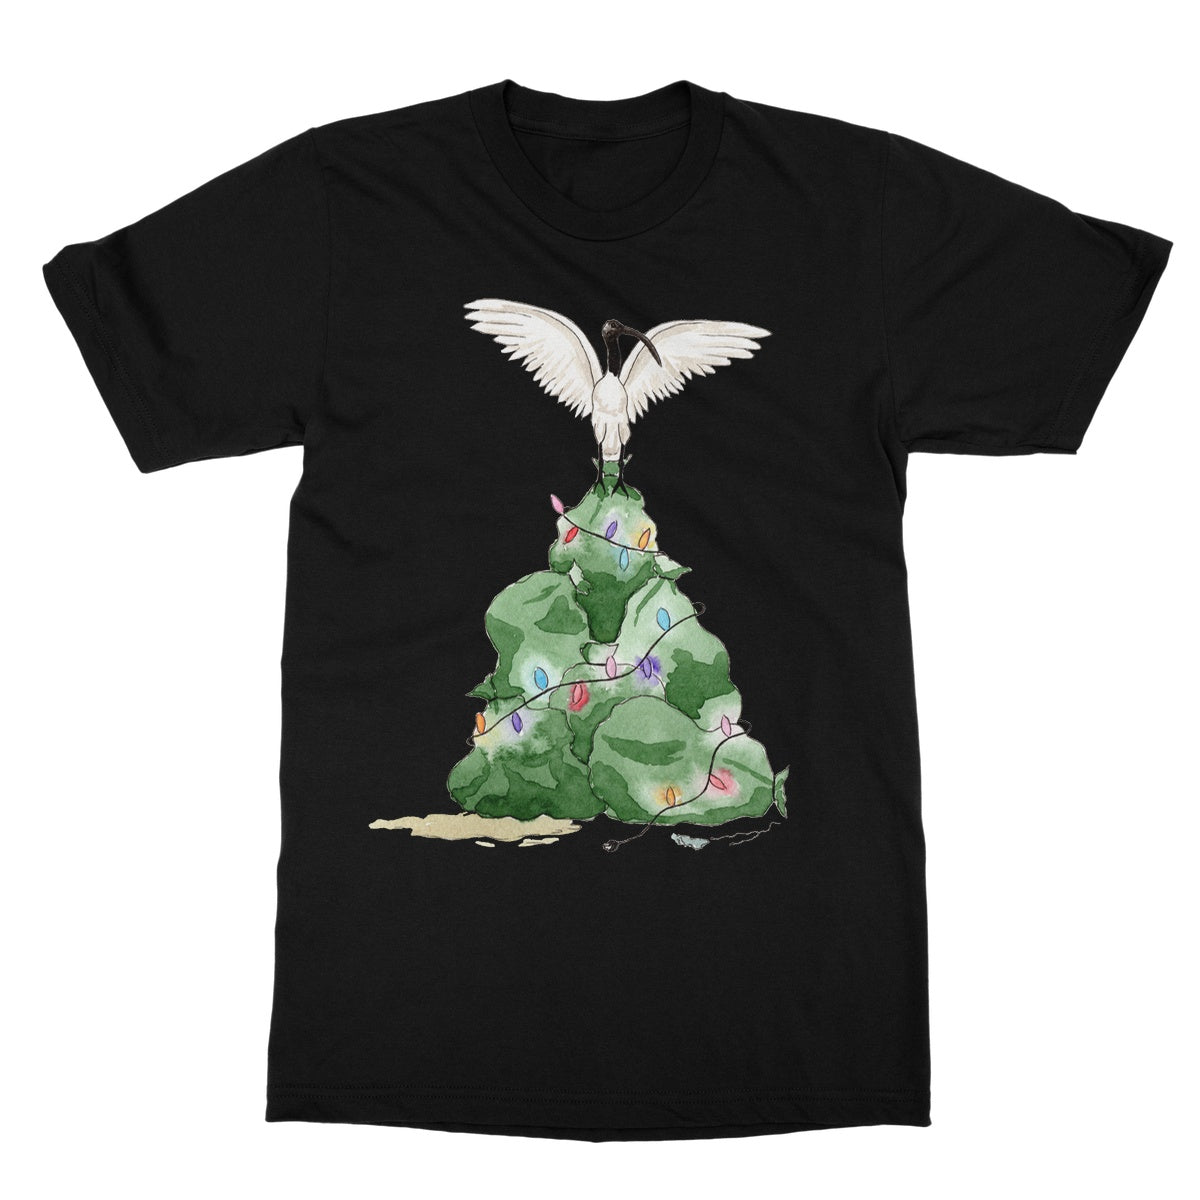 Merry Bin Chickmas Unisex T-Shirt